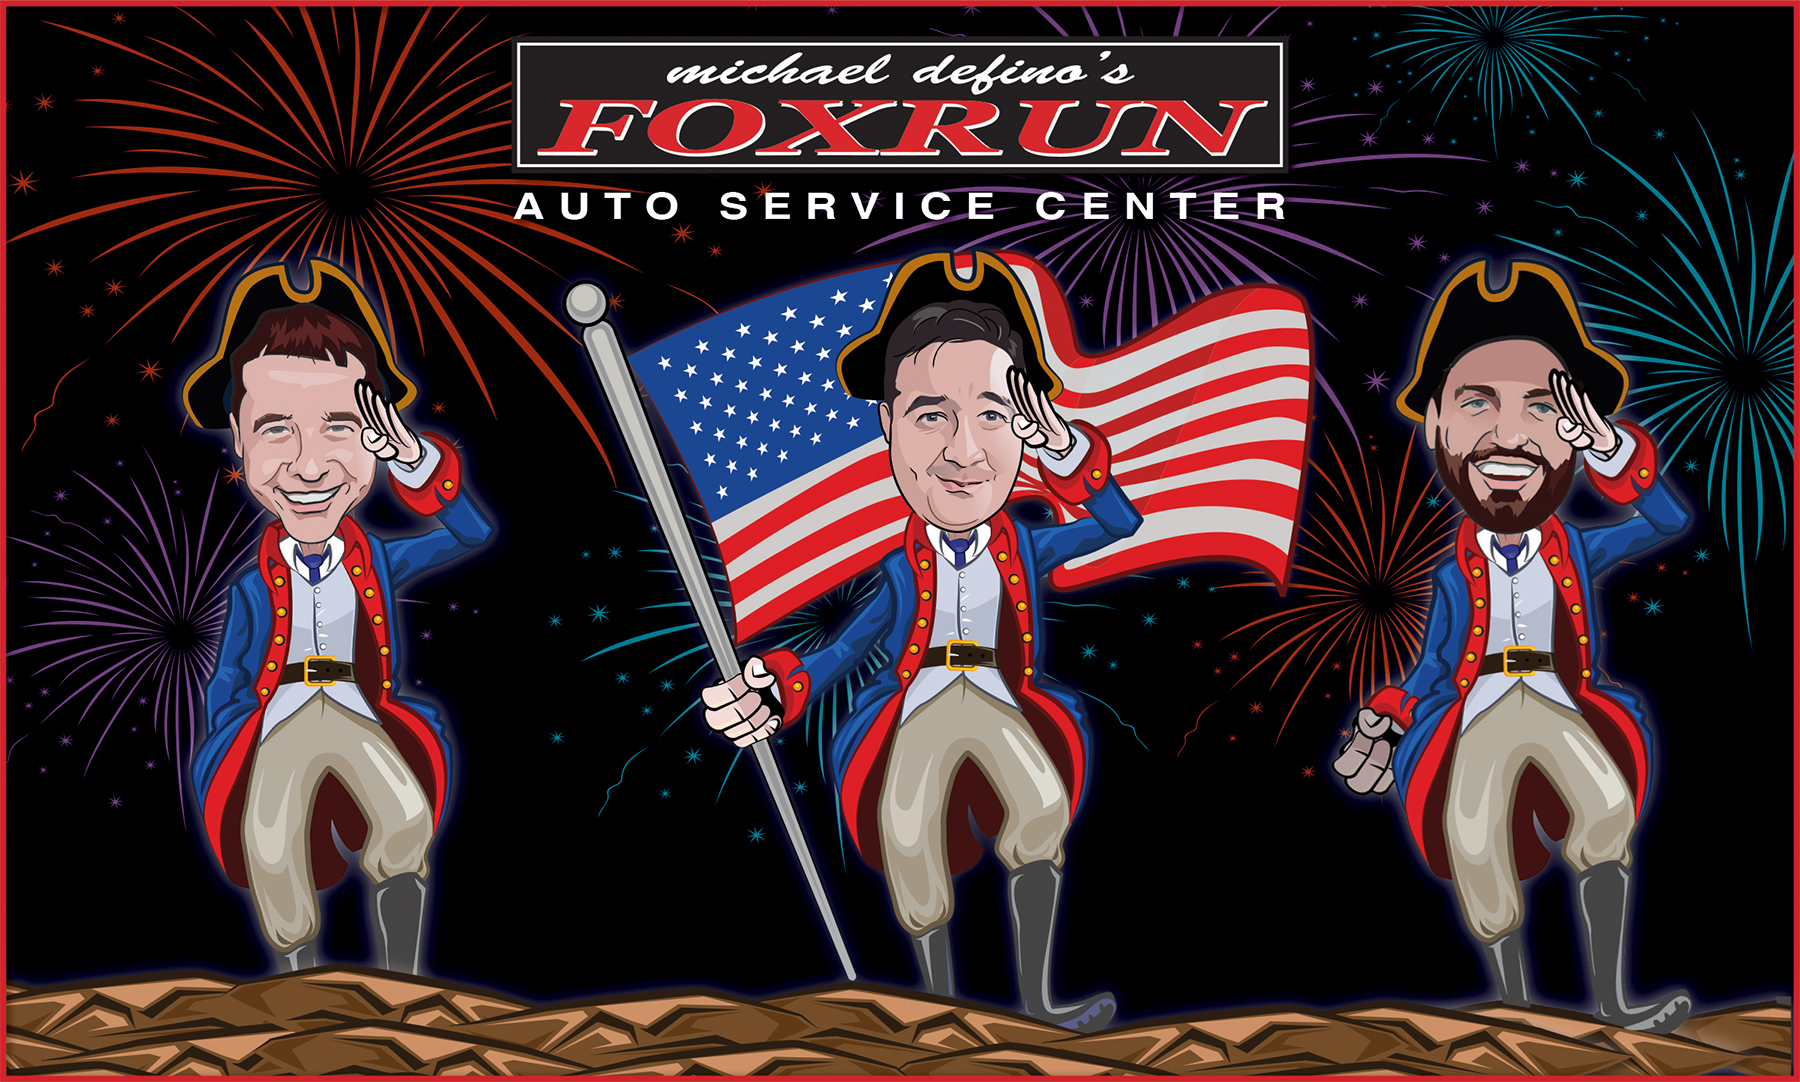 Happy 4th of July from Fox Run Auto!